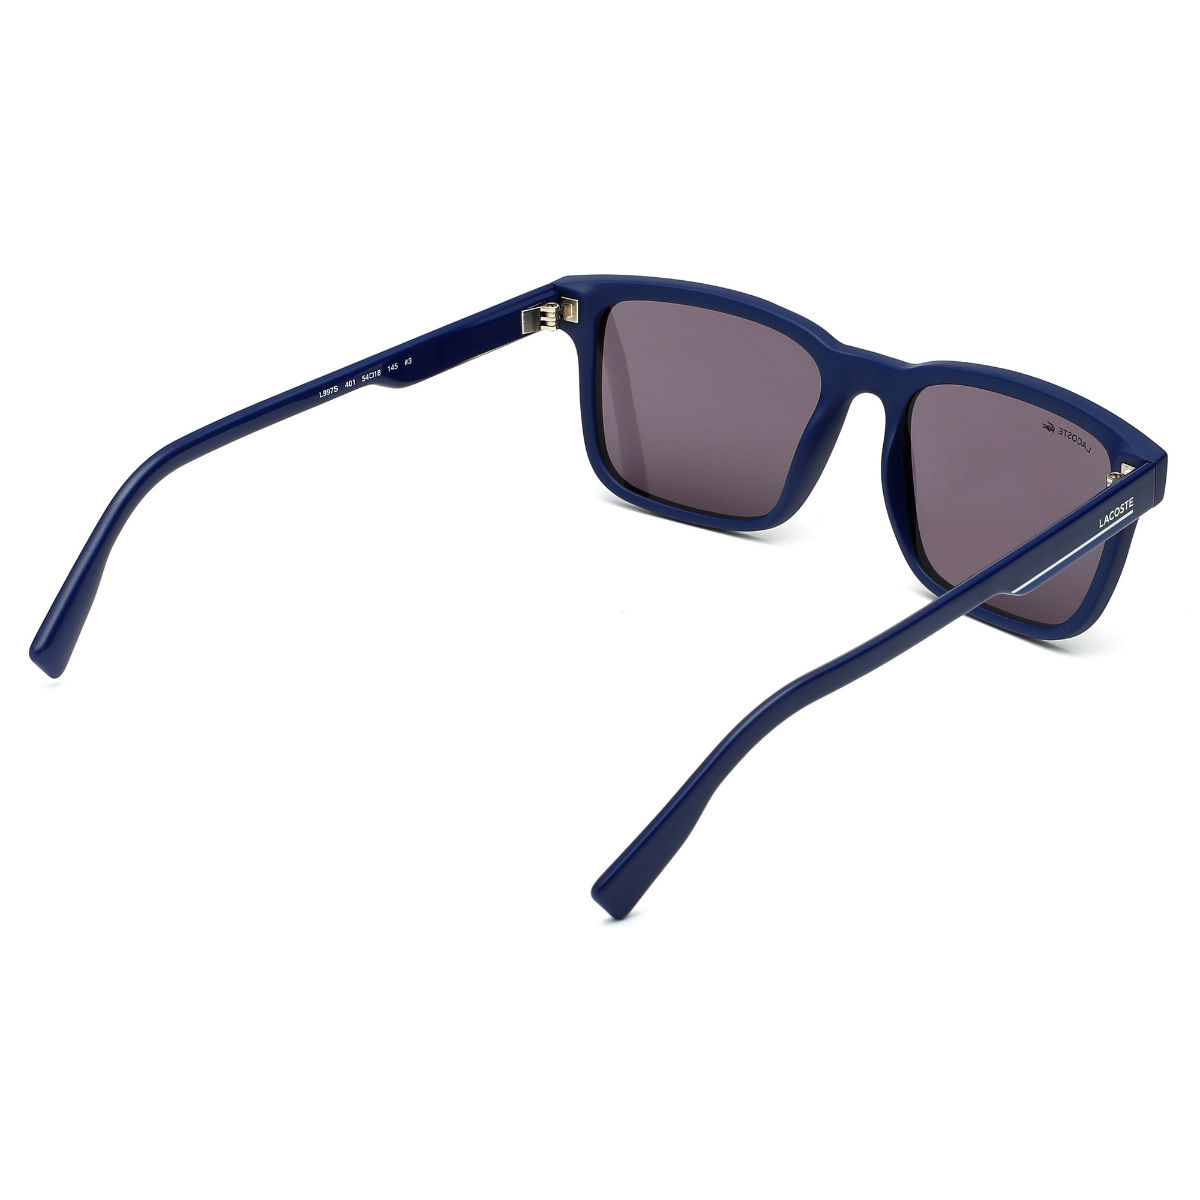 Buy Lacoste Gradient Rectangular Men's Sunglasses 715 424 58 S|58|Blue  Color at Amazon.in